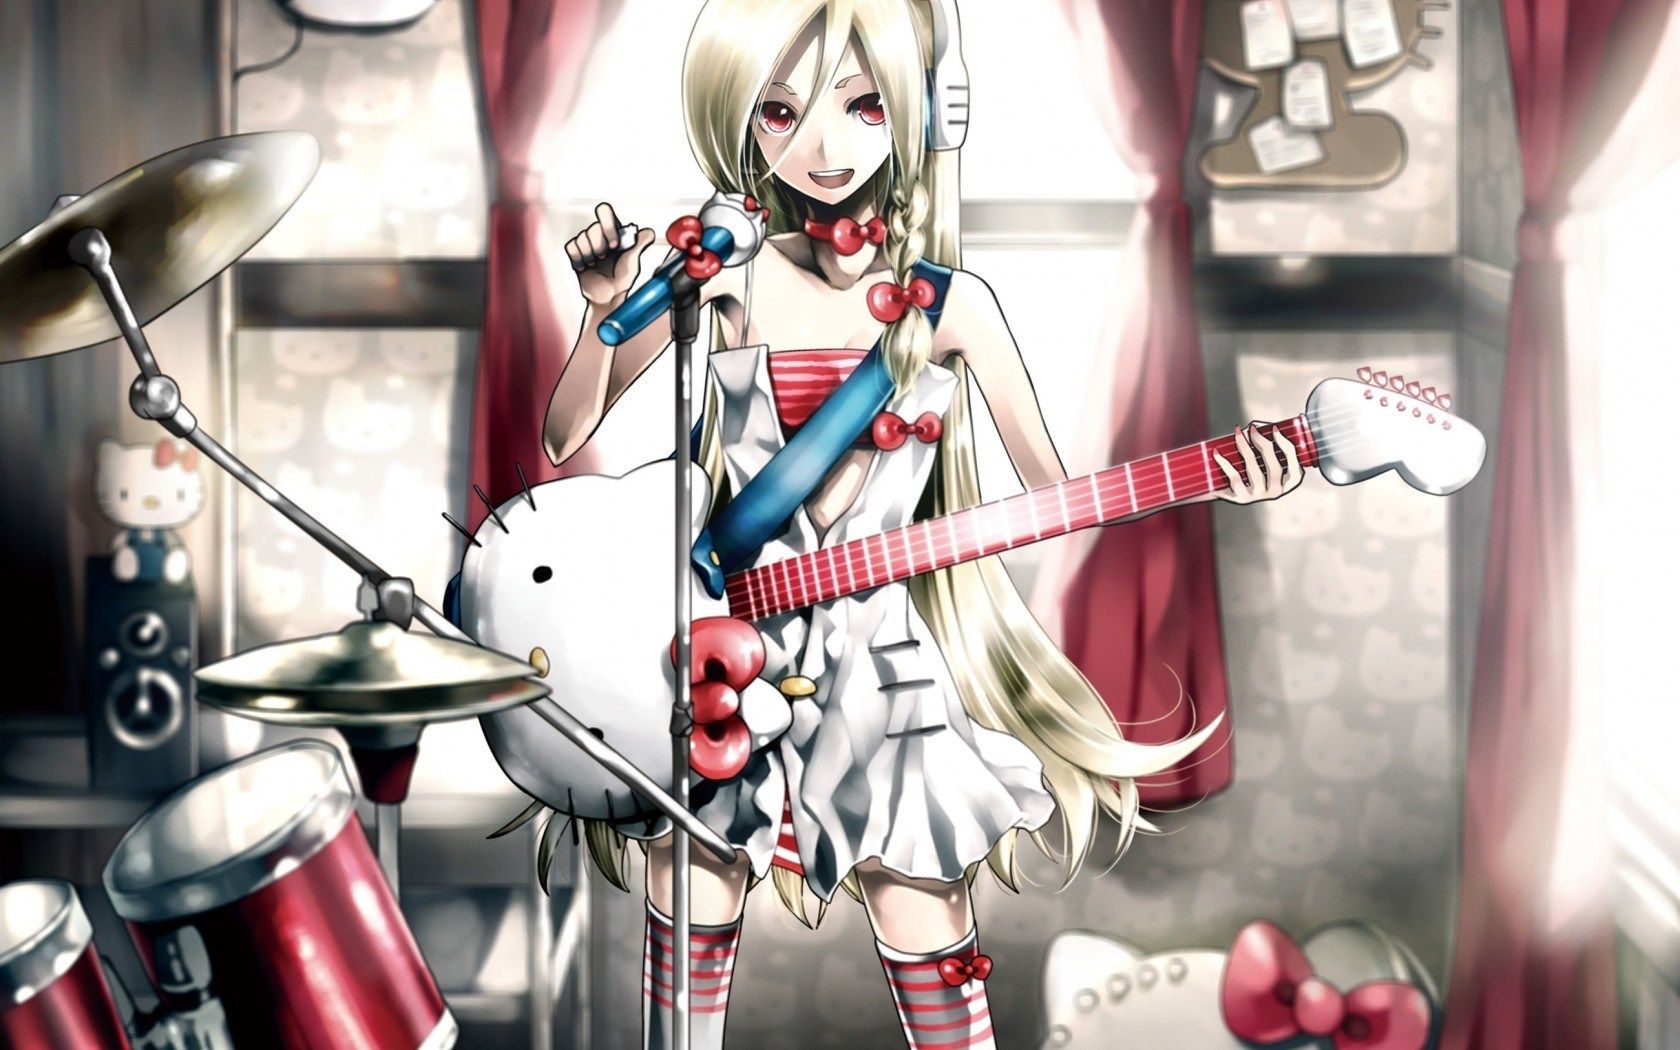 HD wallpaper, Blonde, Anime, Hello, Music, Art, Kitty, Girl, Guitar